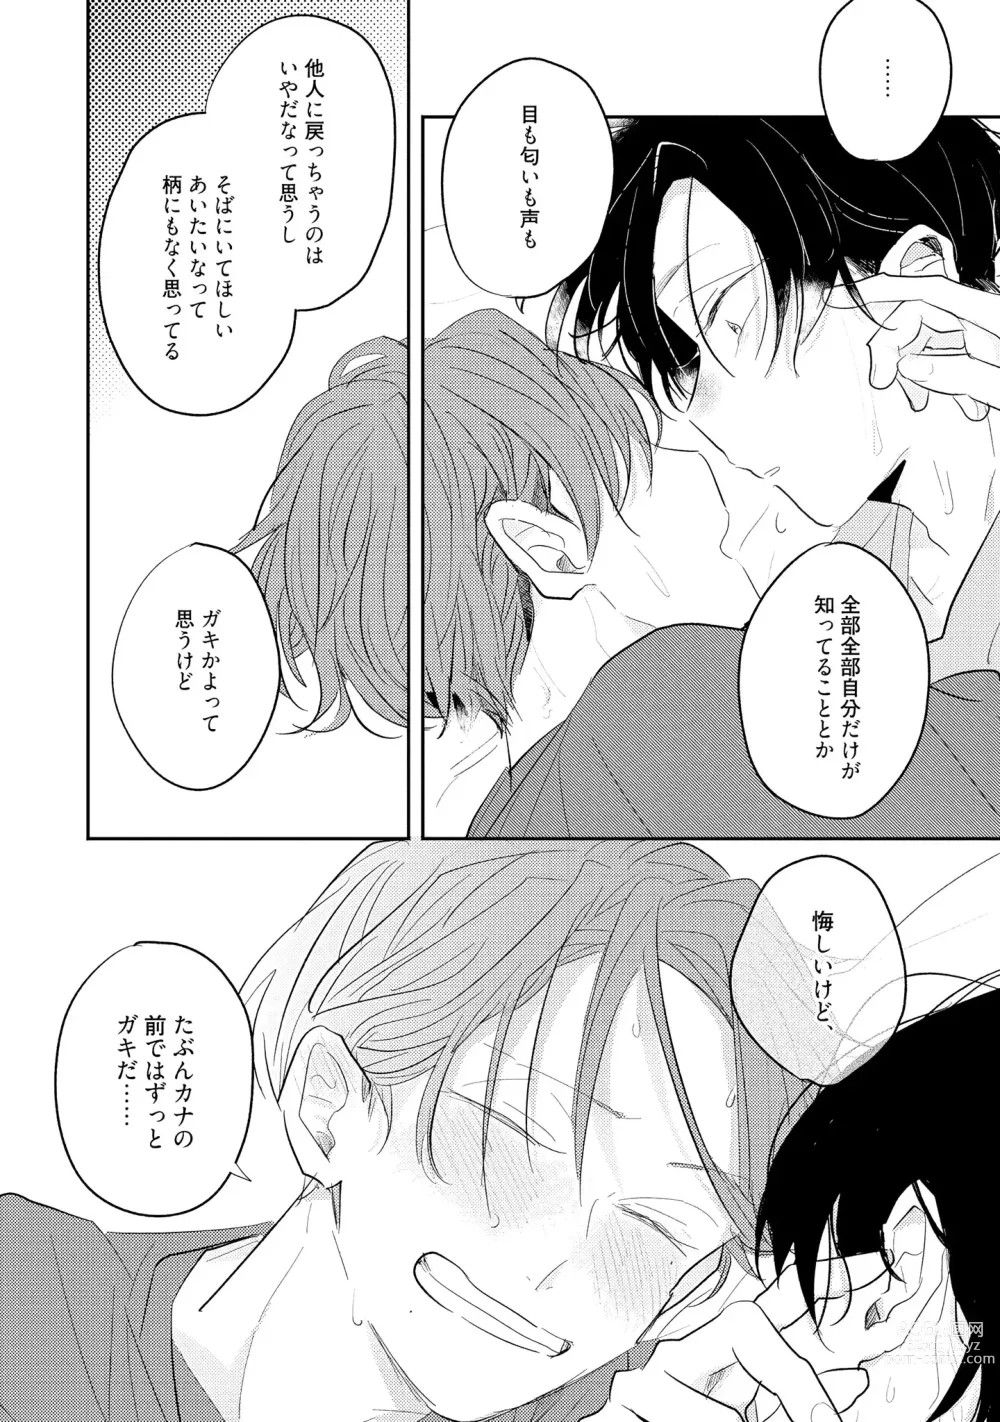 Page 213 of manga No Doubt Lilac